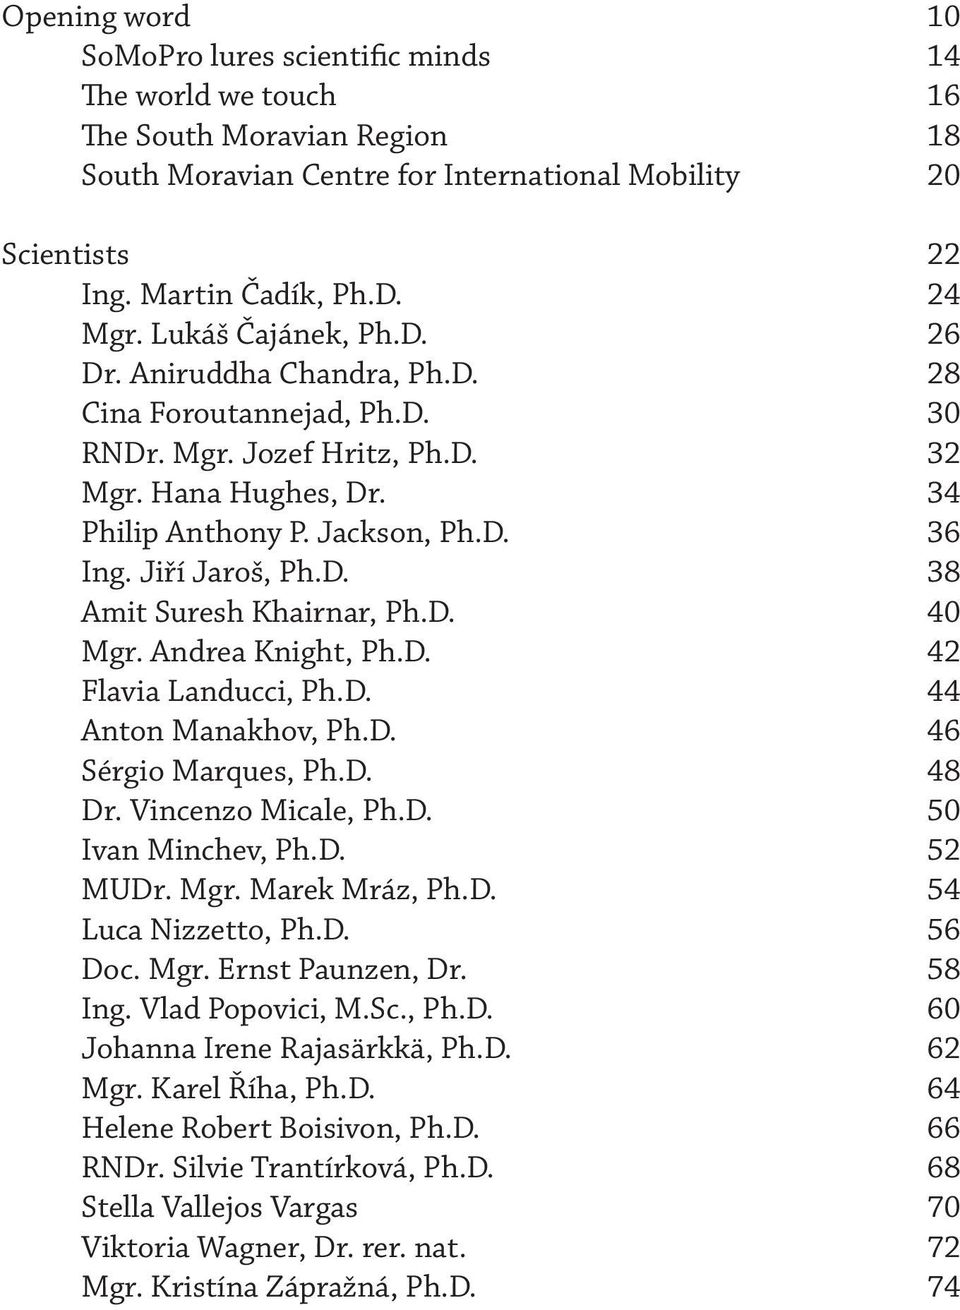 D. 38 Amit Suresh Khairnar, Ph.D. 40 Mgr. Andrea Knight, Ph.D. 42 Flavia Landucci, Ph.D. 44 Anton Manakhov, Ph.D. 46 Sérgio Marques, Ph.D. 48 Dr. Vincenzo Micale, Ph.D. 50 Ivan Minchev, Ph.D. 52 MUDr.